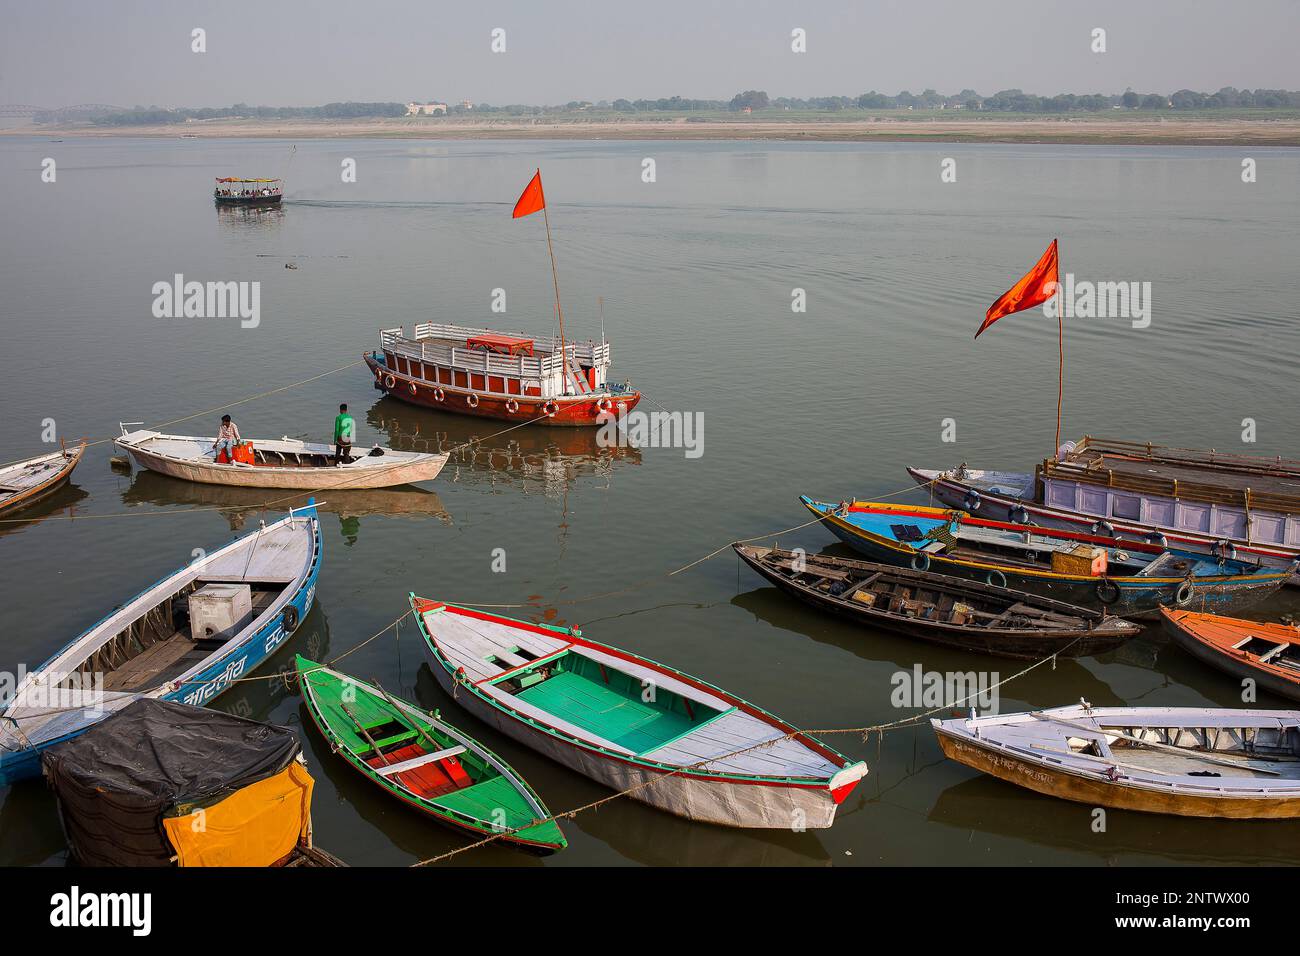 Boats of Fishermen, in Ganges river, Varanasi, Uttar Pradesh, India. Stock Photo